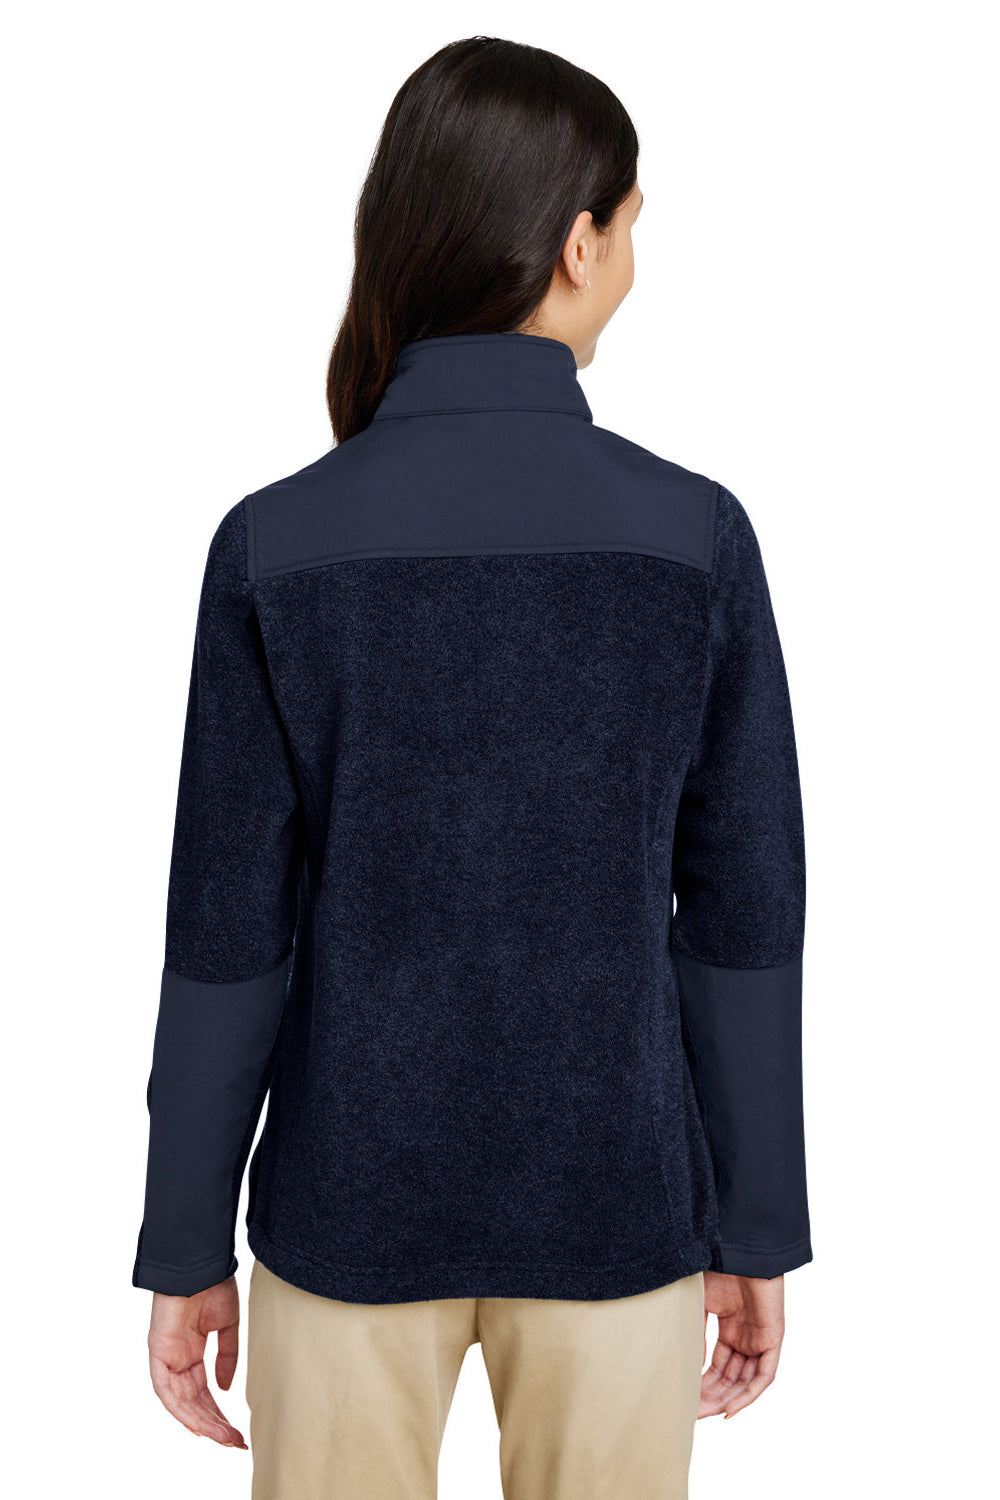 Core 365 CE890W Womens Journey Summit Hybrid Full Zip Jacket Classic Navy Blue Back